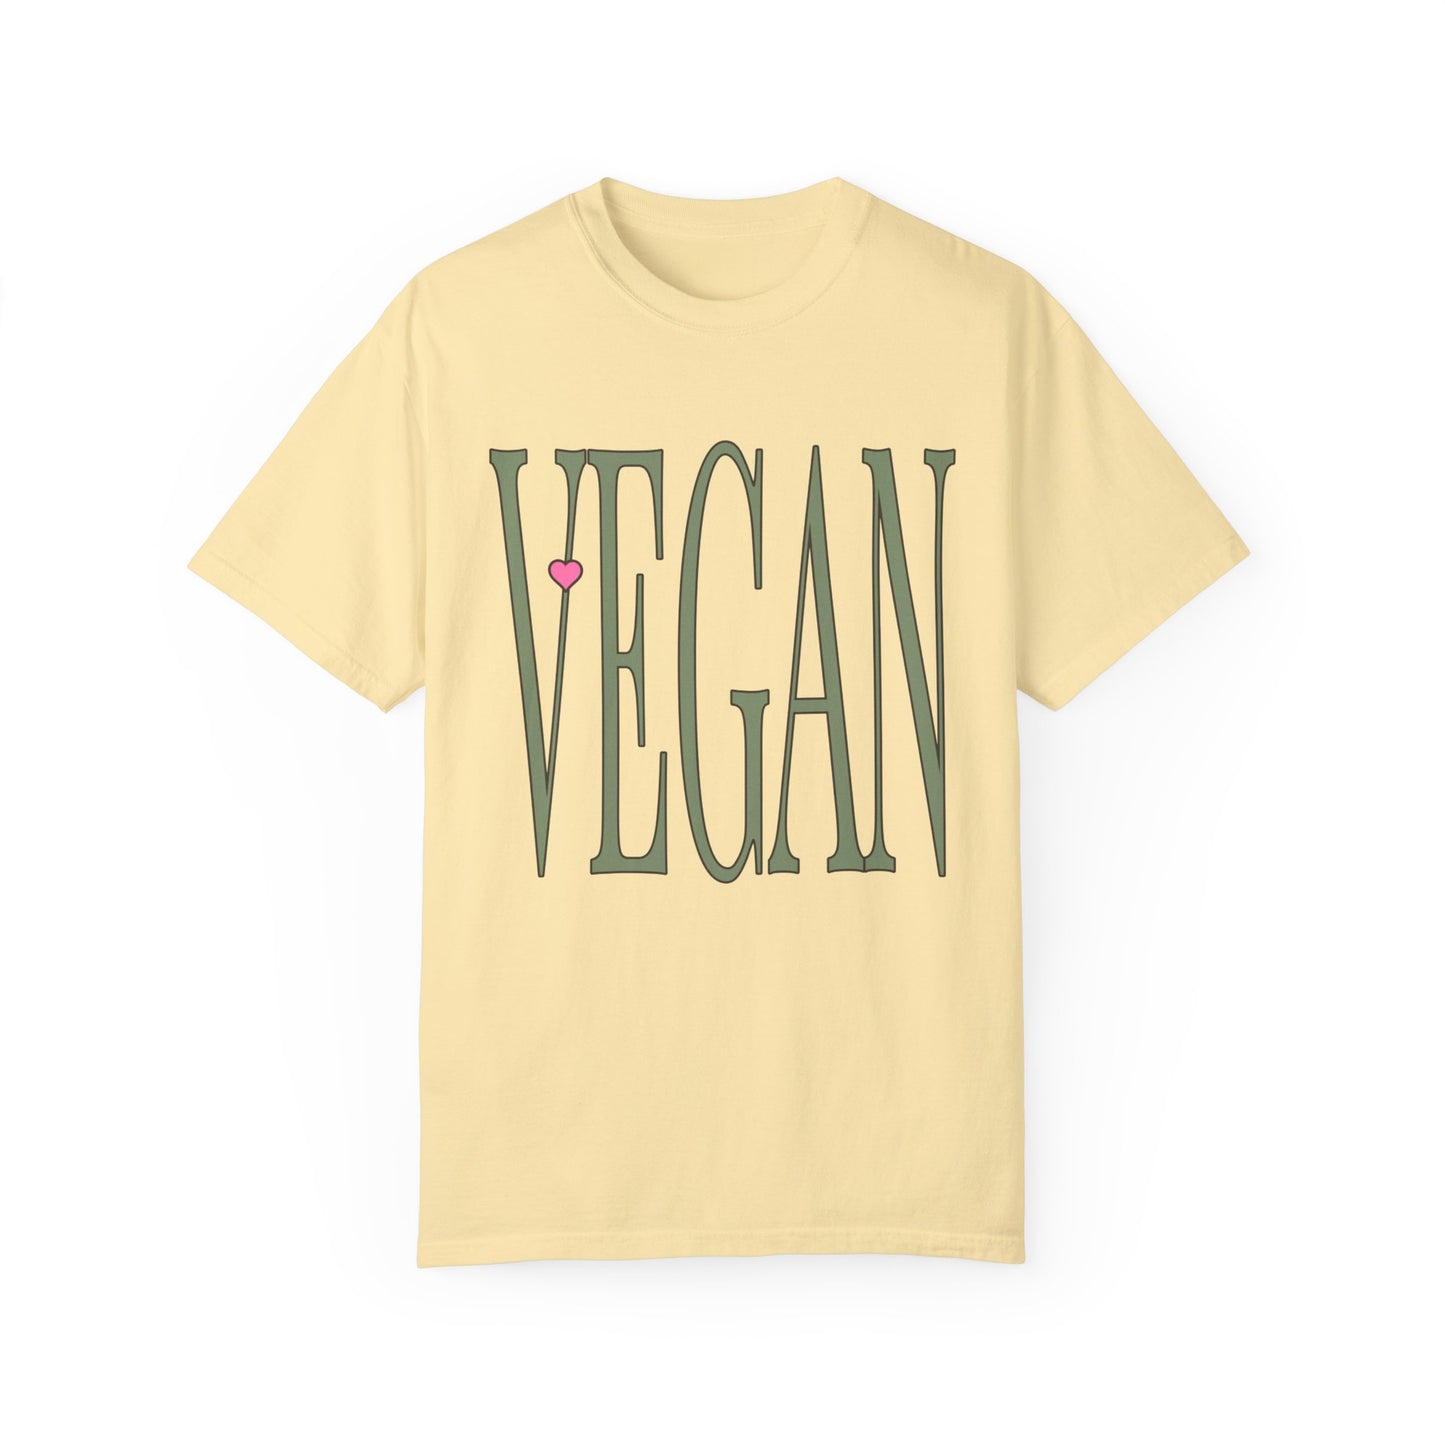 Simple Vegan Tee Shirt in Lighter Colors {Unisex}